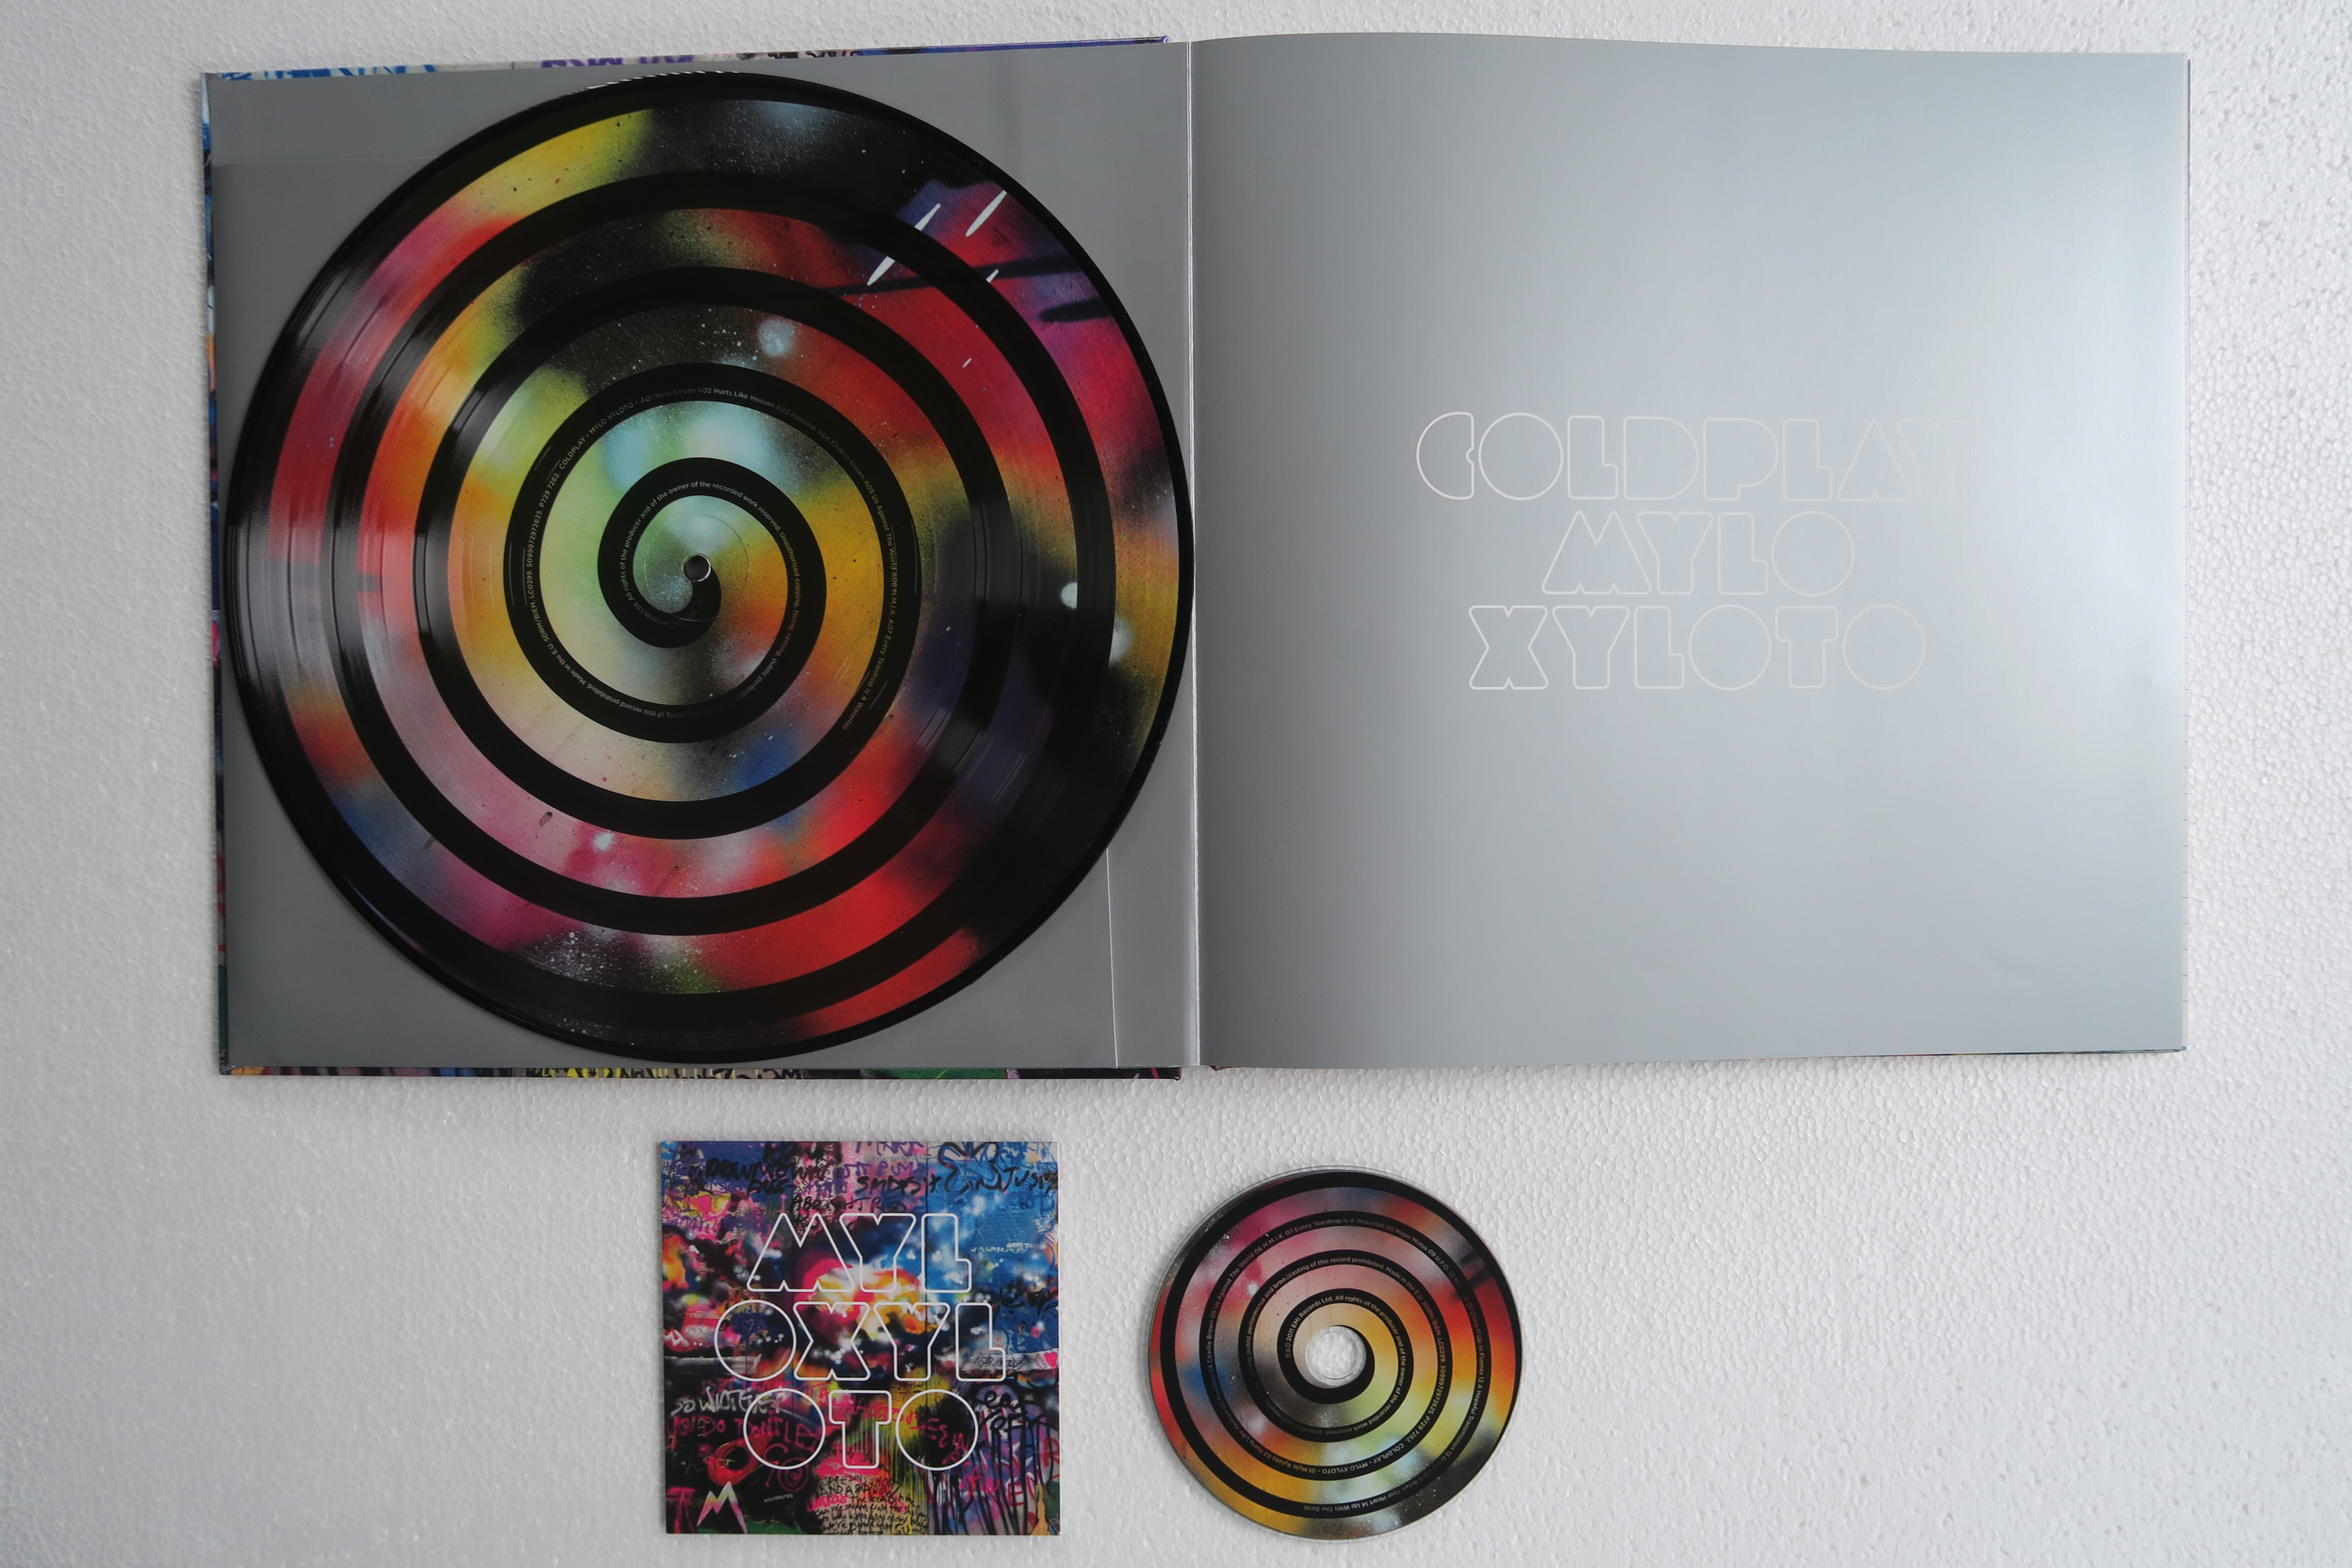 Vinilo Ed. Limitada Coldplay Mylo Xyloto – Shopavia